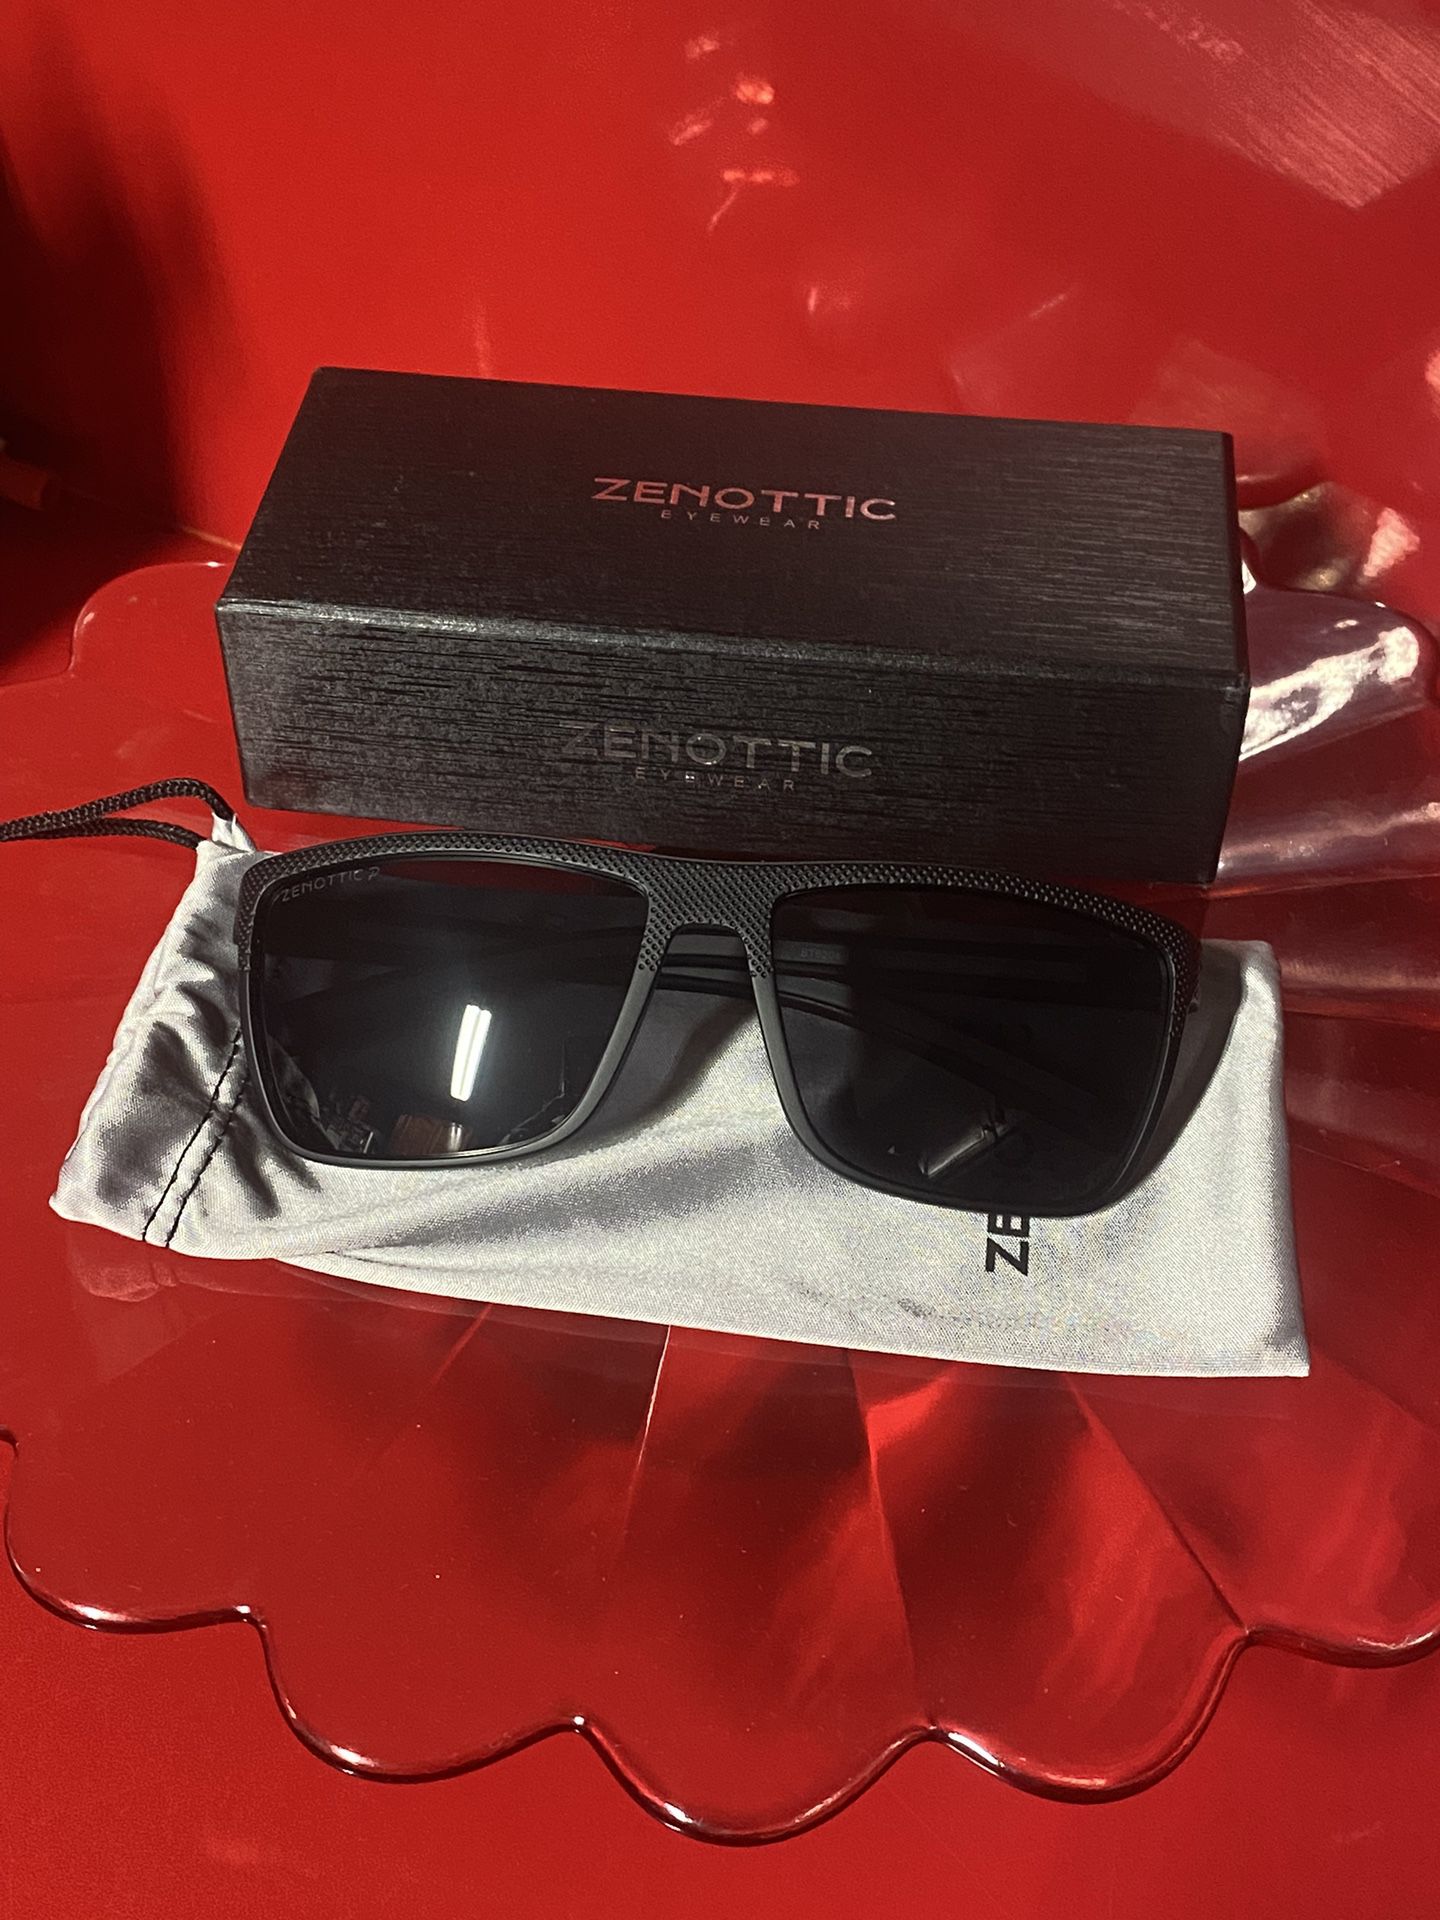 New Men’s Polarized Sunglasses $20